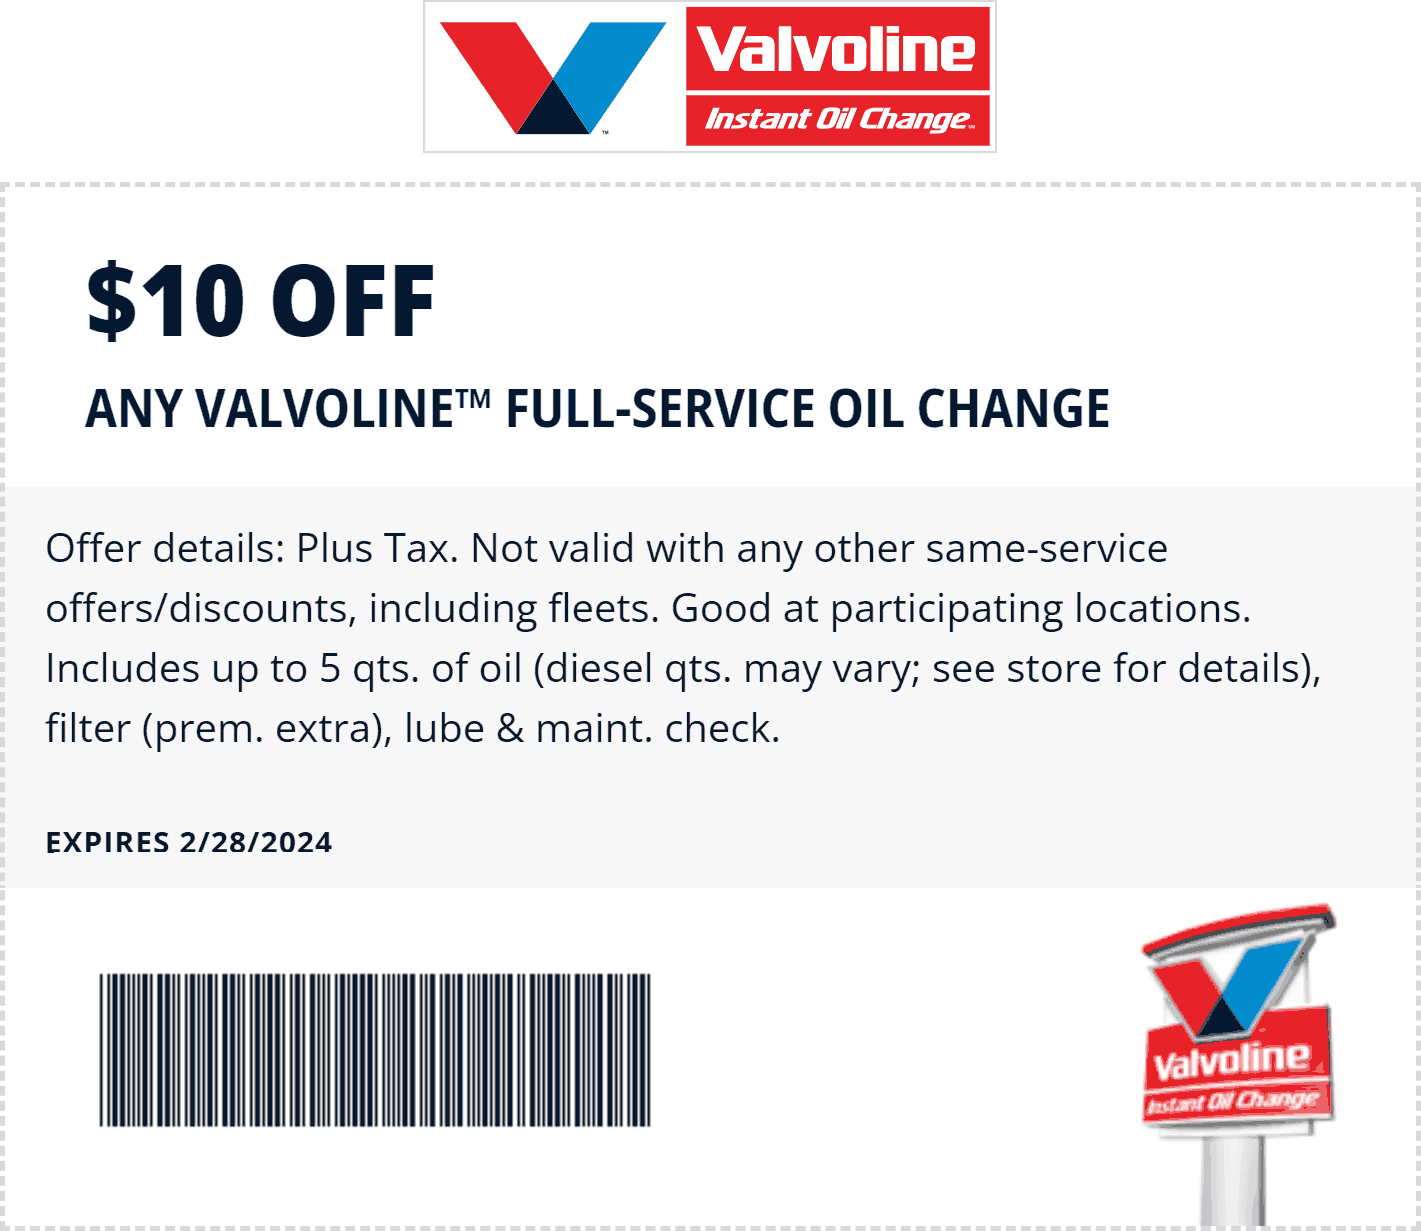 Valvoline stores Coupon  $10 off any oil change at Valvoline #valvoline 